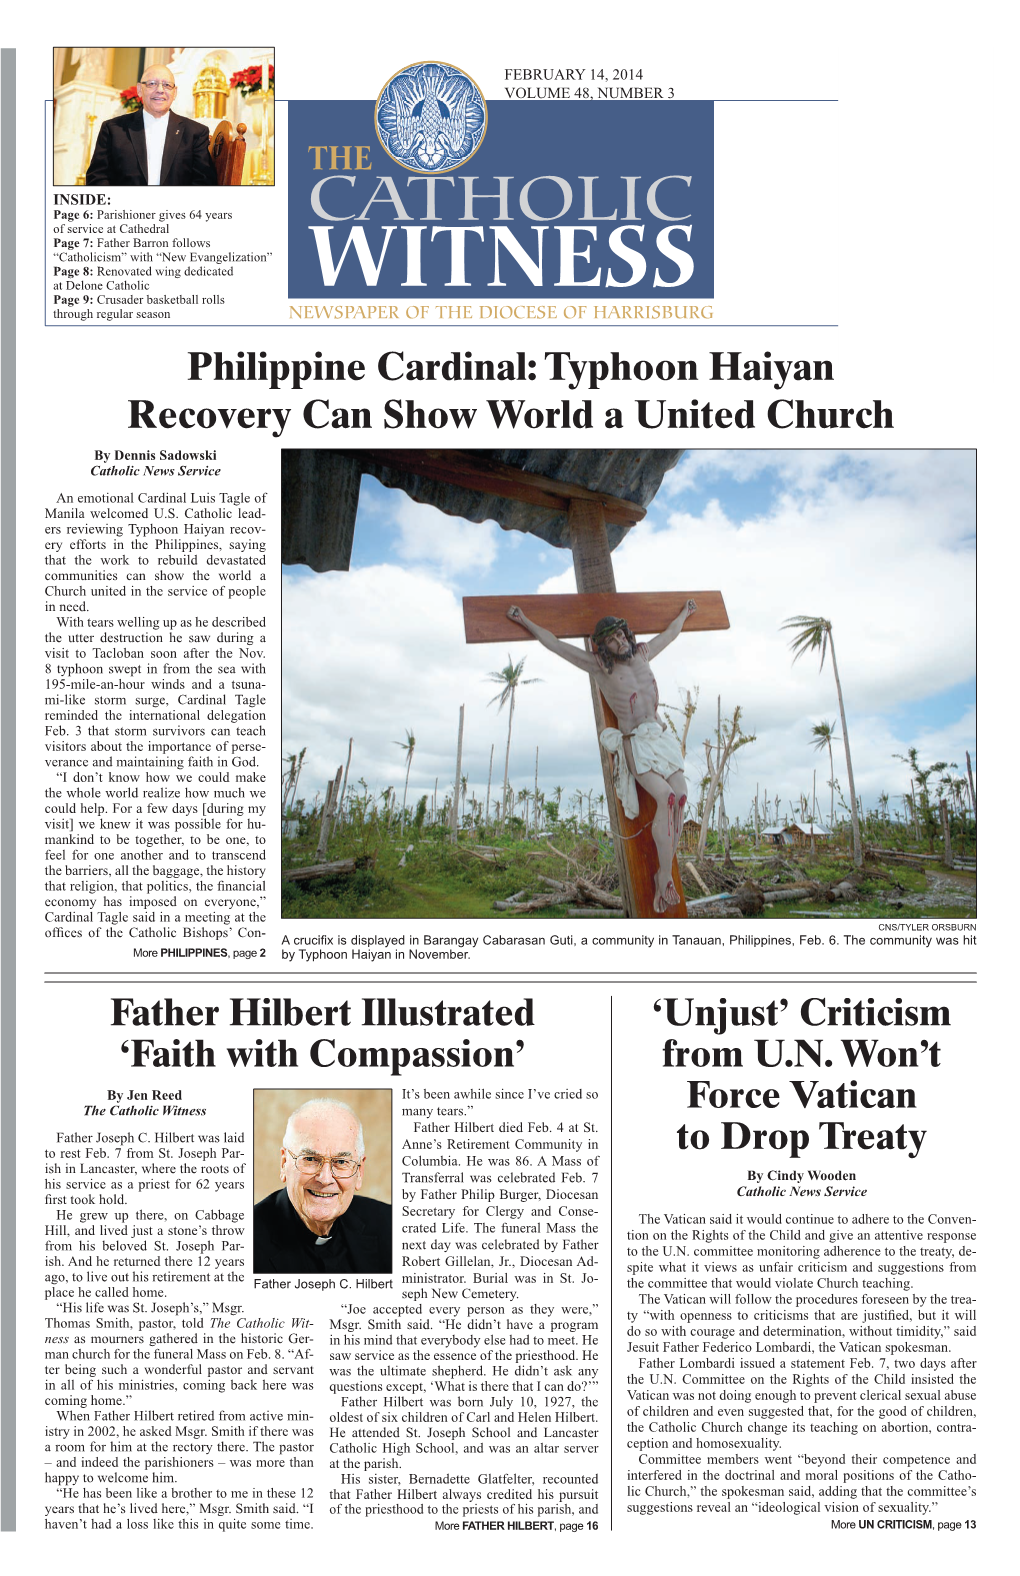 Typhoon Haiyan Recovery Can Show World a United Church by Dennis Sadowski Catholic News Service